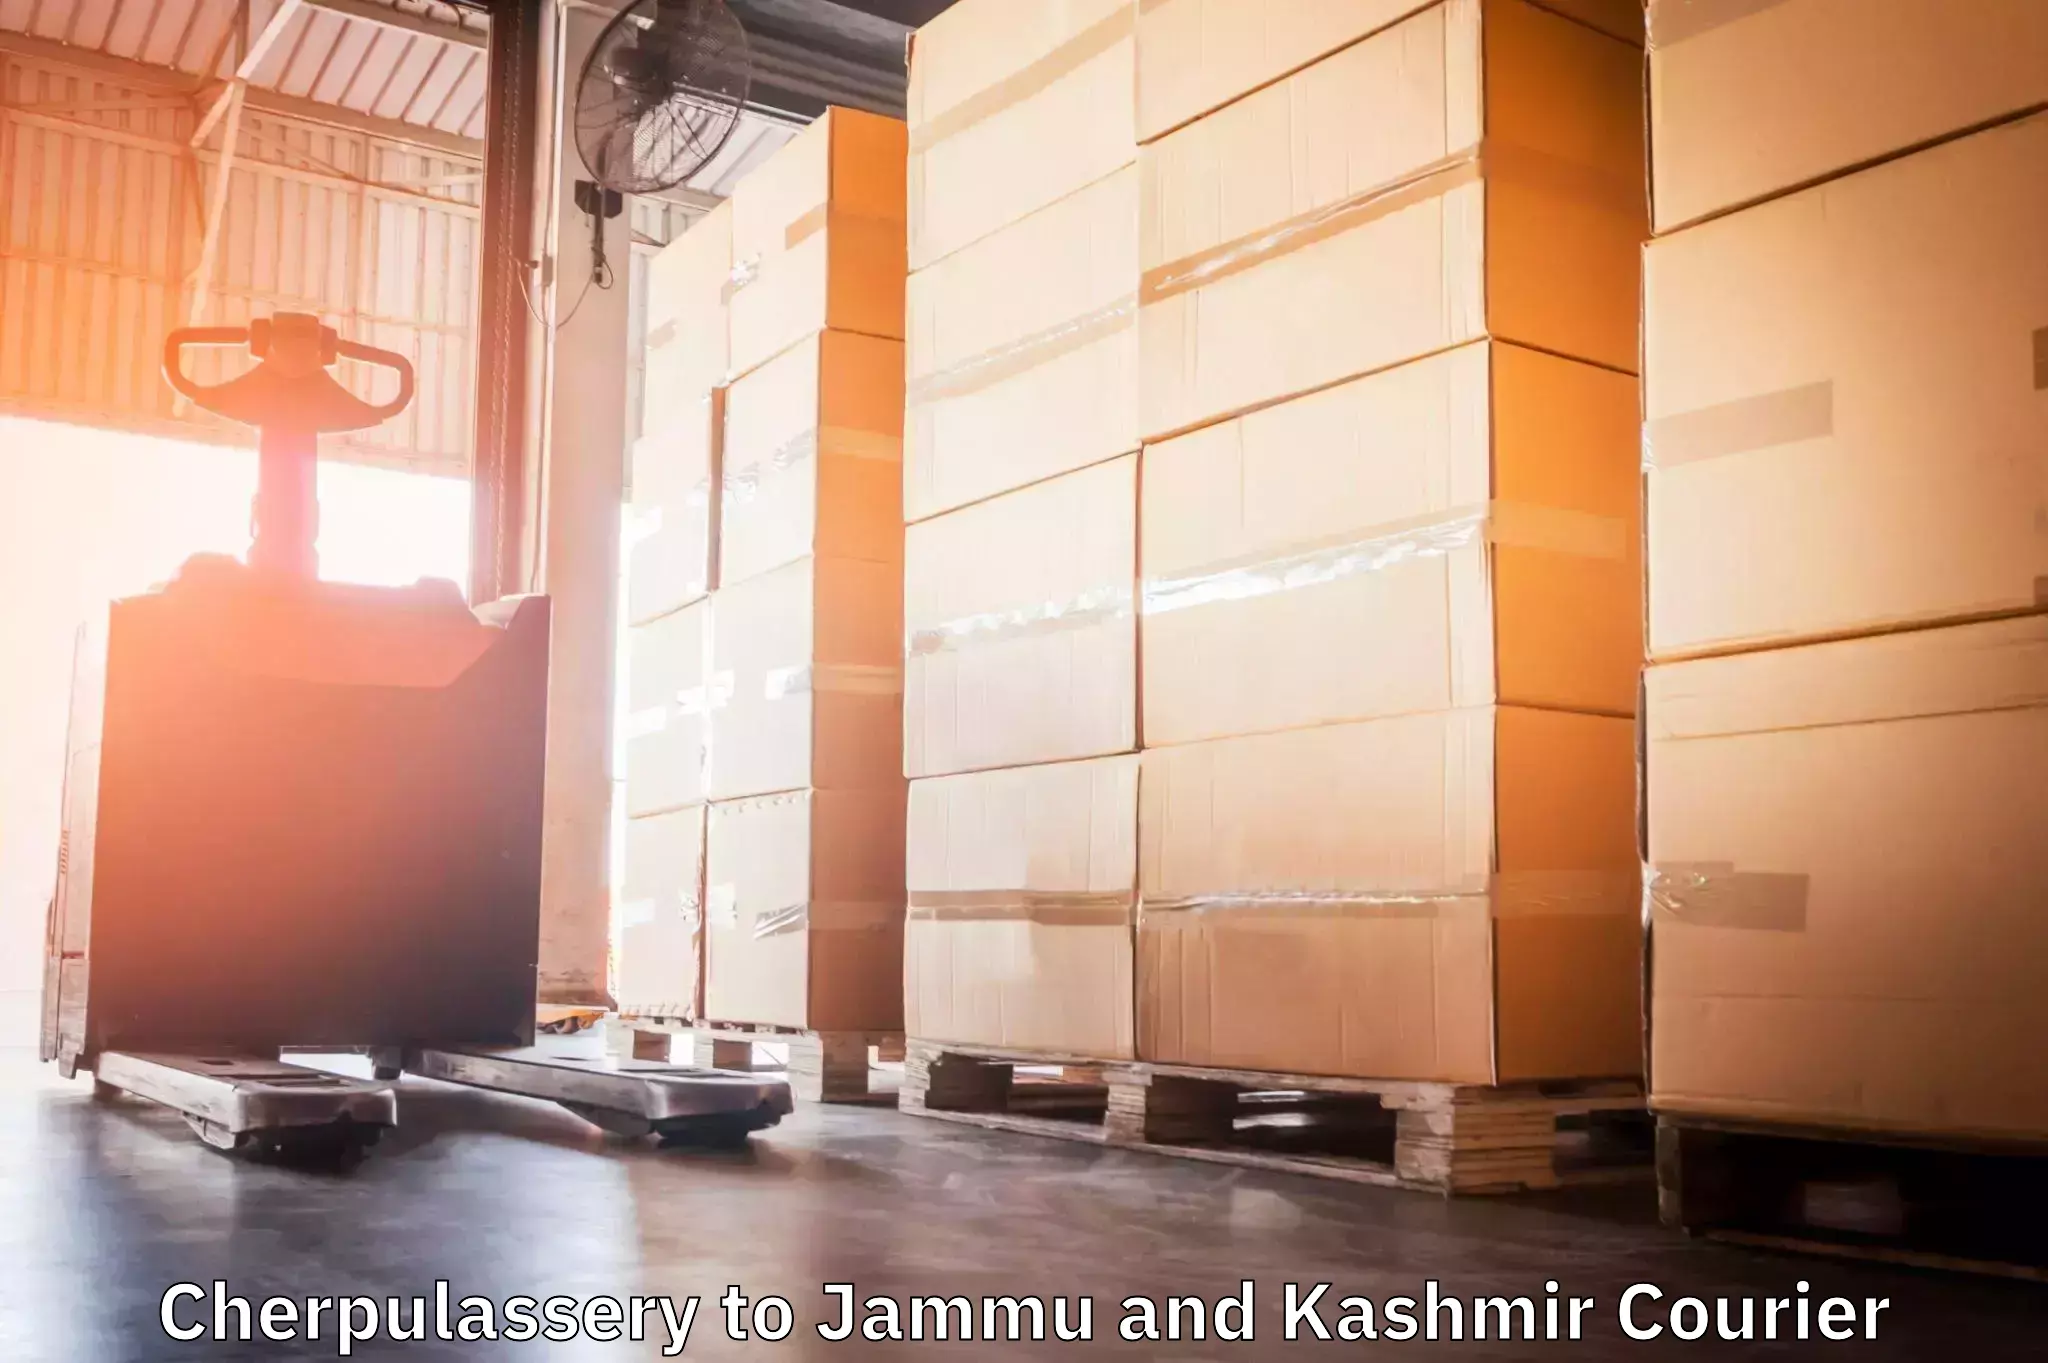 Express delivery capabilities Cherpulassery to University of Jammu